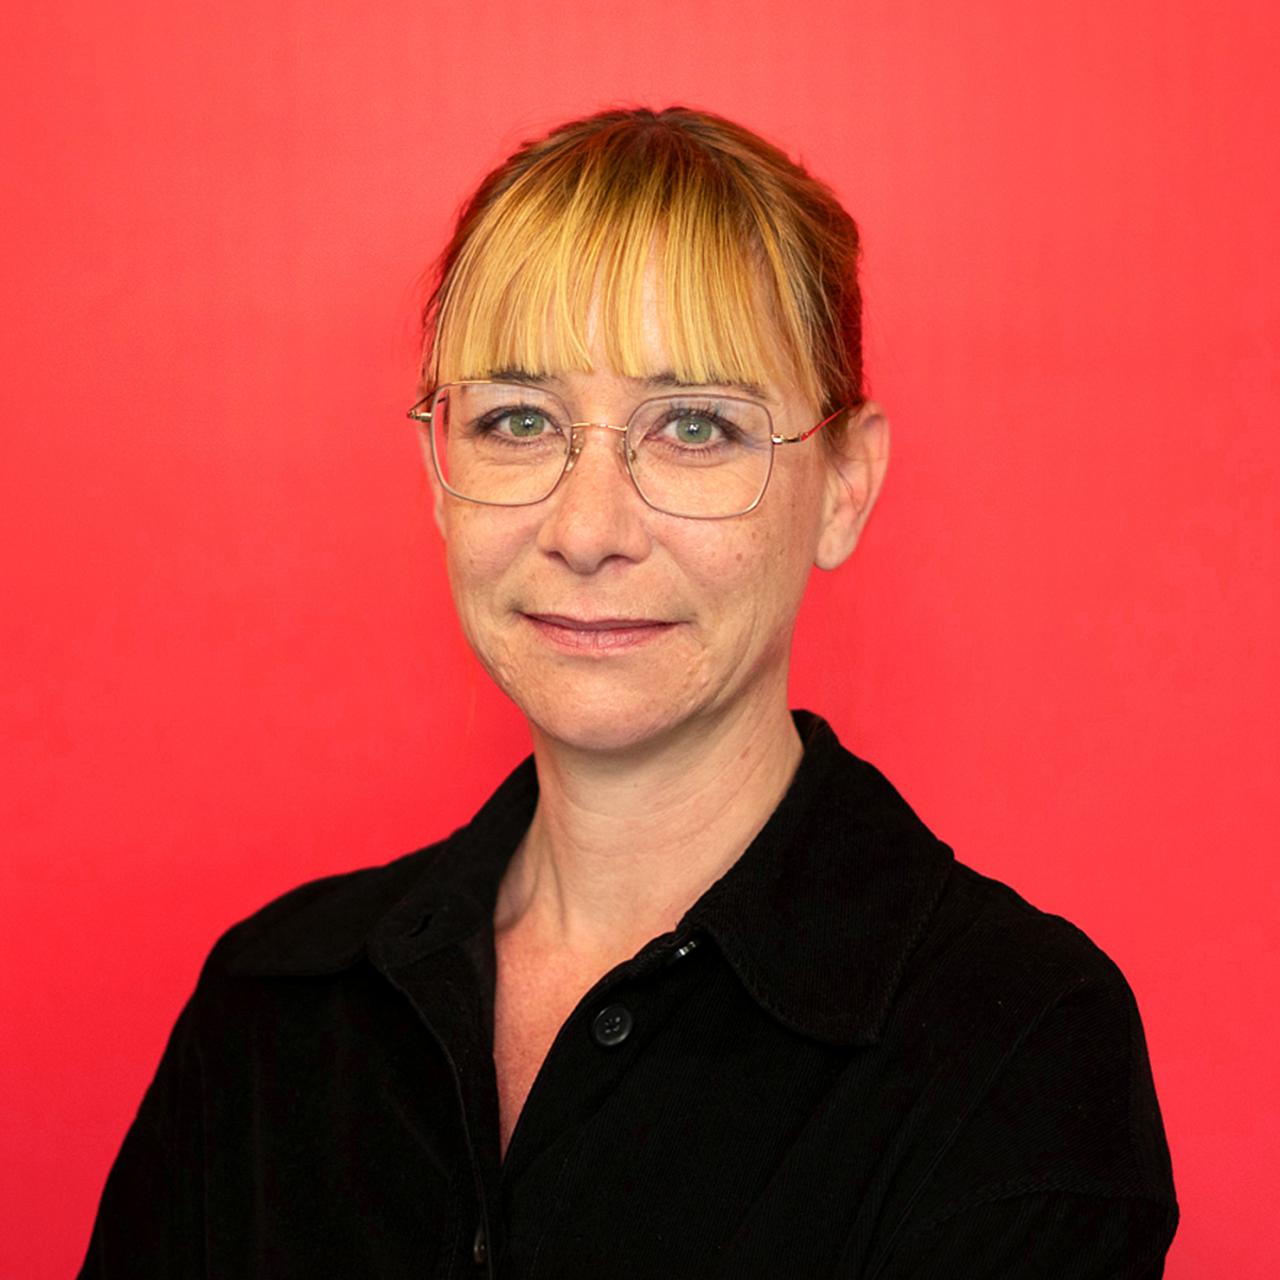 Karin Knapp